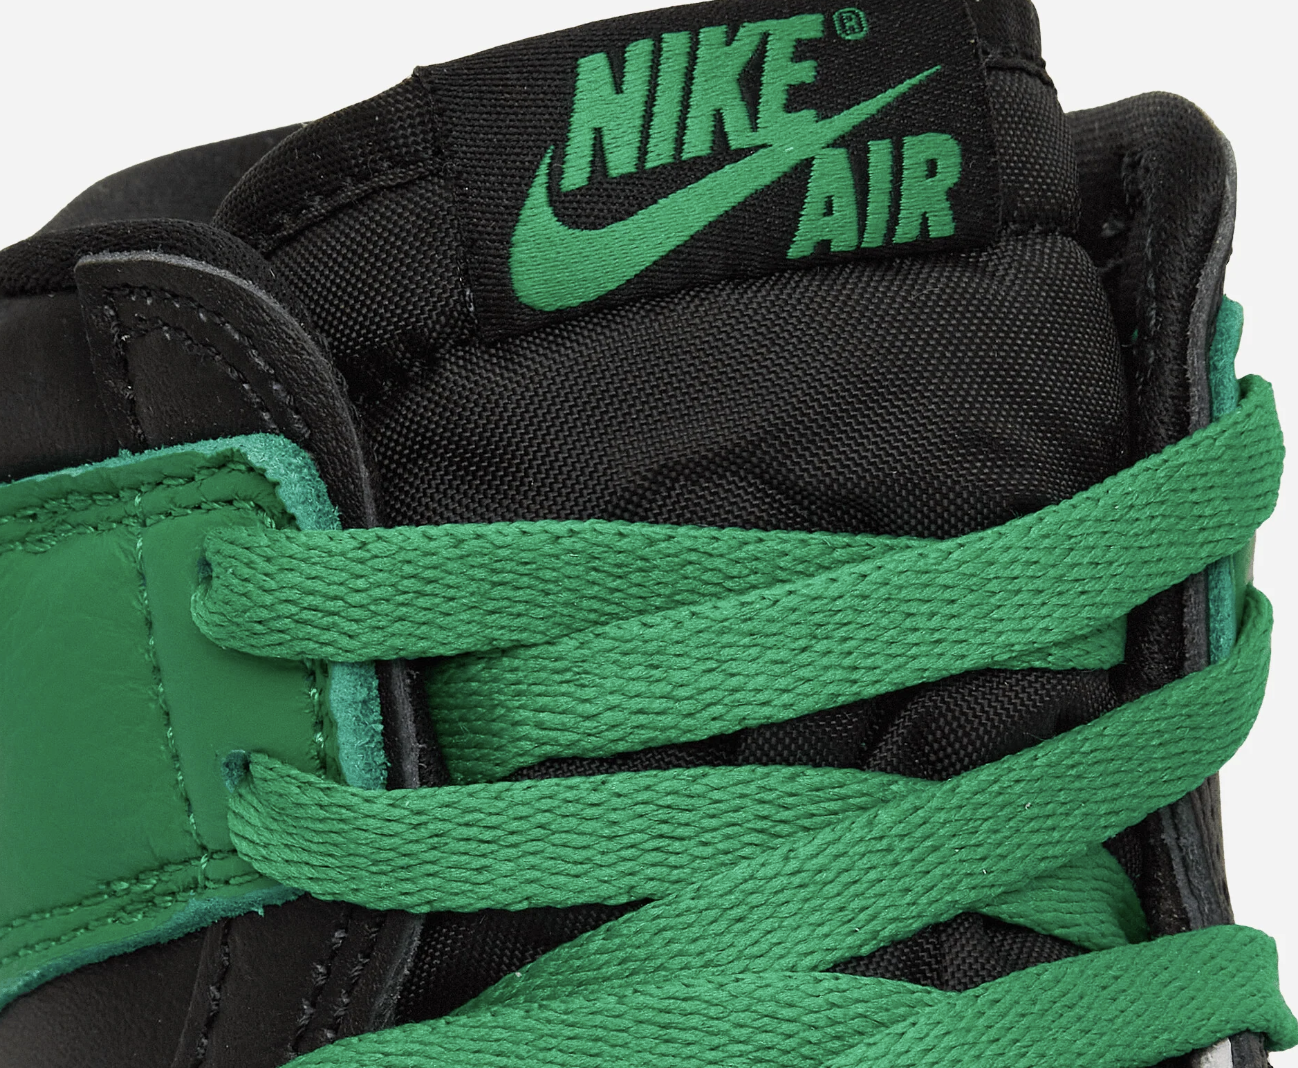 Кроссовки Nike Air Jordan оригинал (Джорданы)